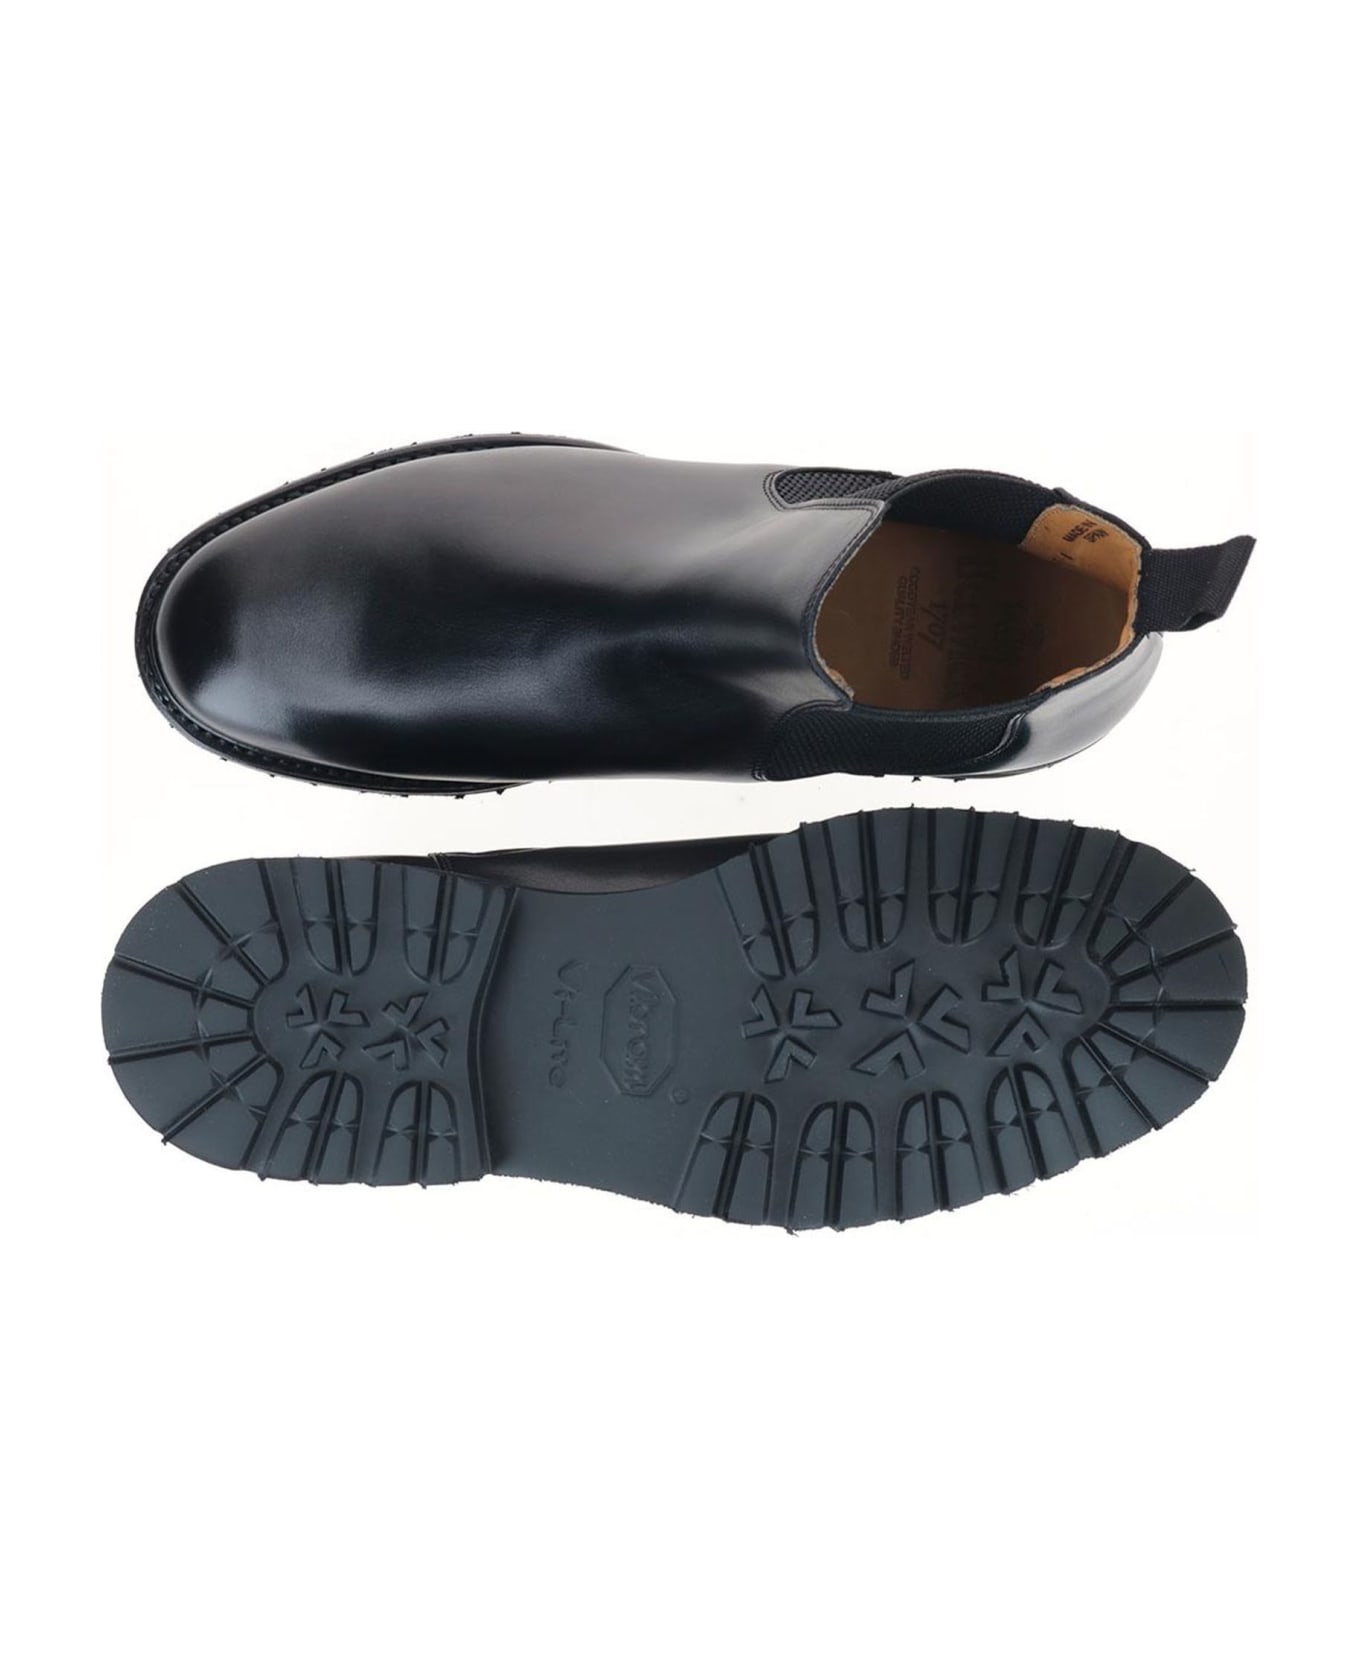 Berwick 1707 Black Leather Chelsea Ankle Boot - Nero